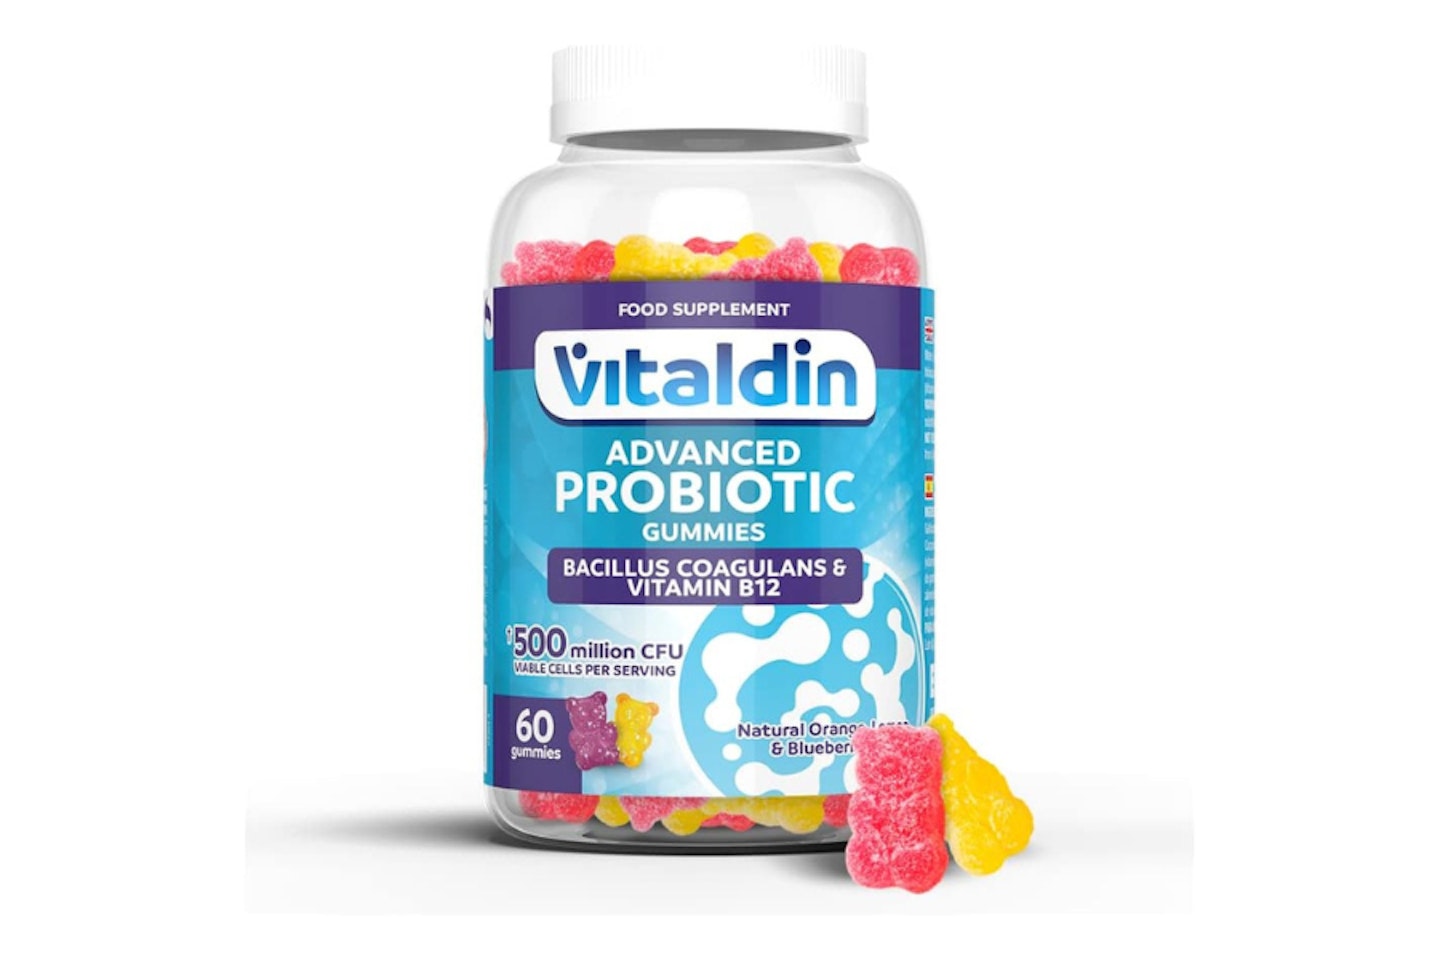 VITALDIN Probiotic Gummies